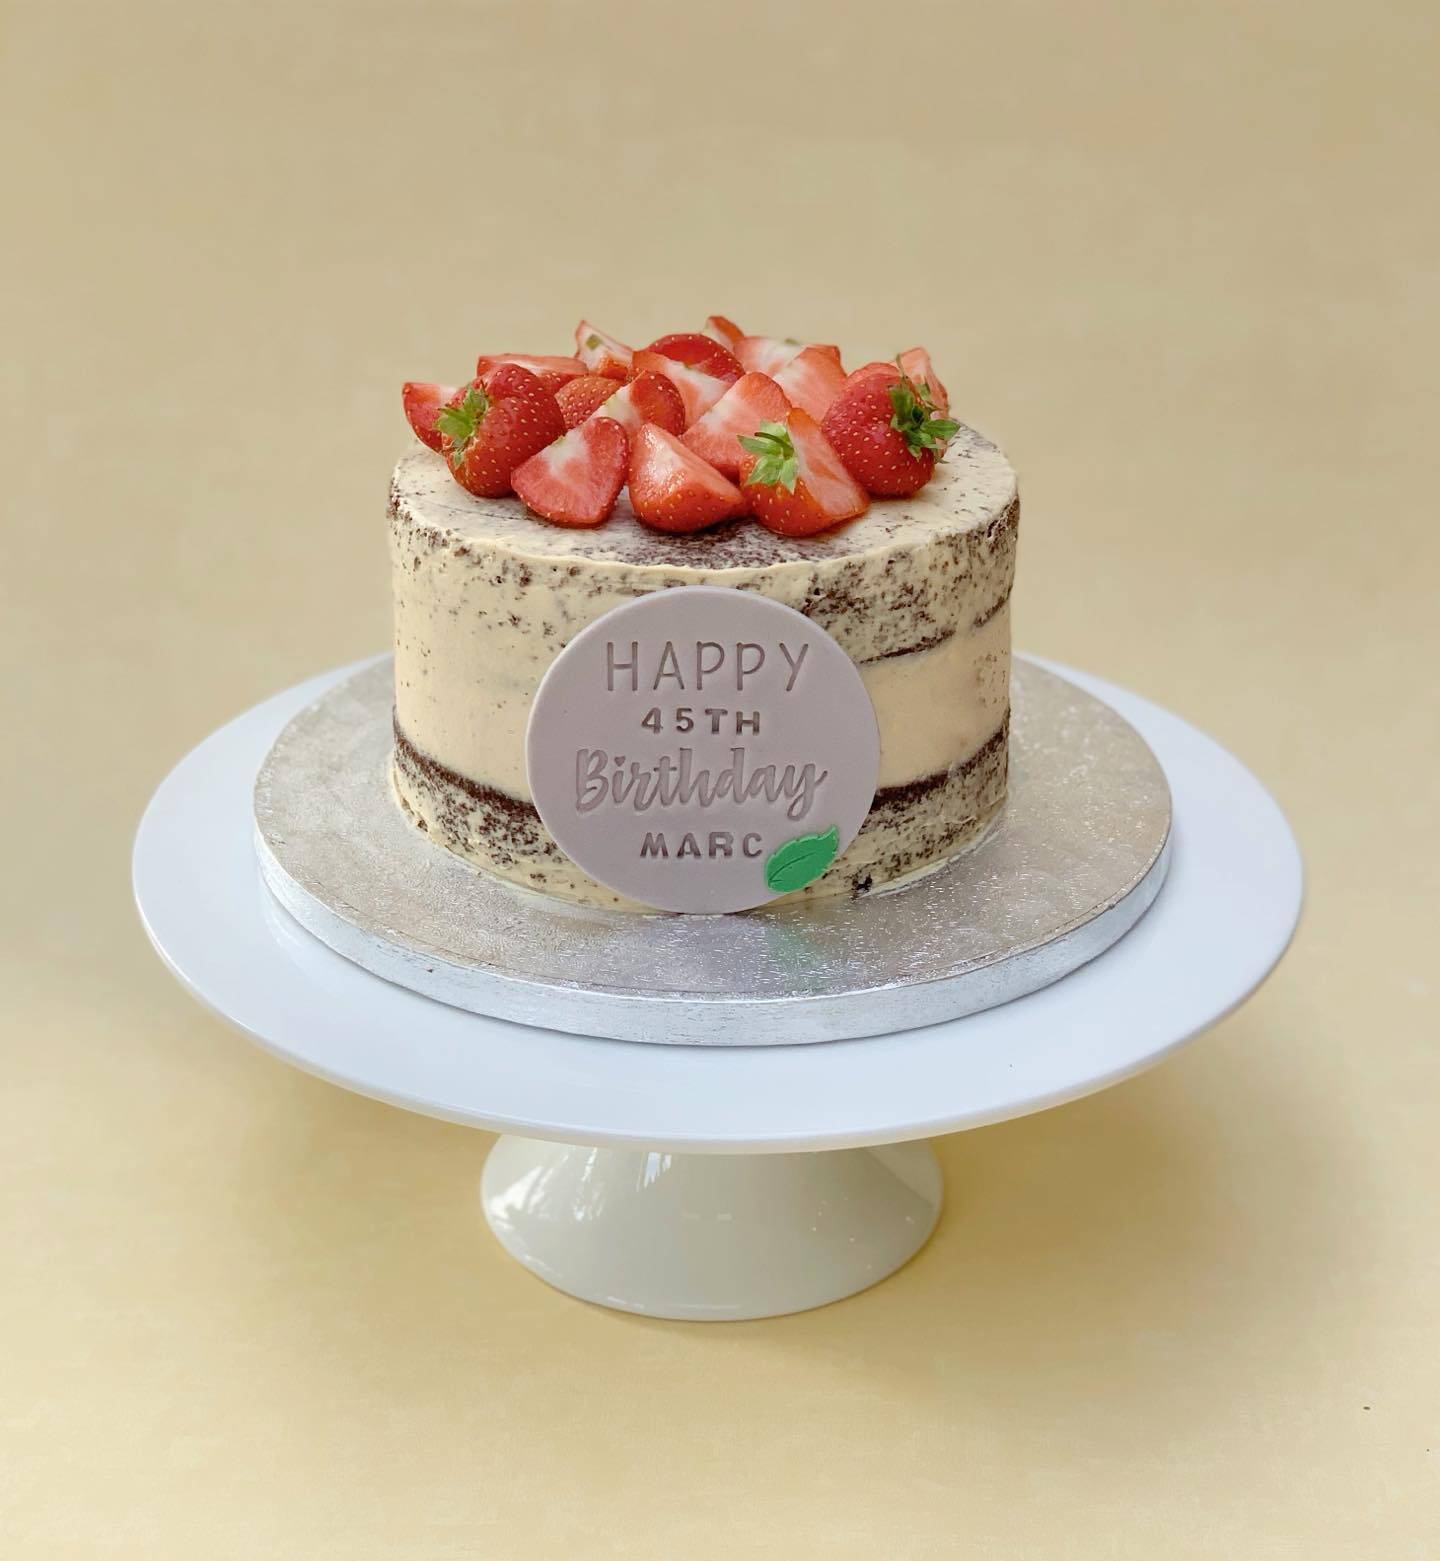 Chocolate Semi-naked Cake with Strawberries